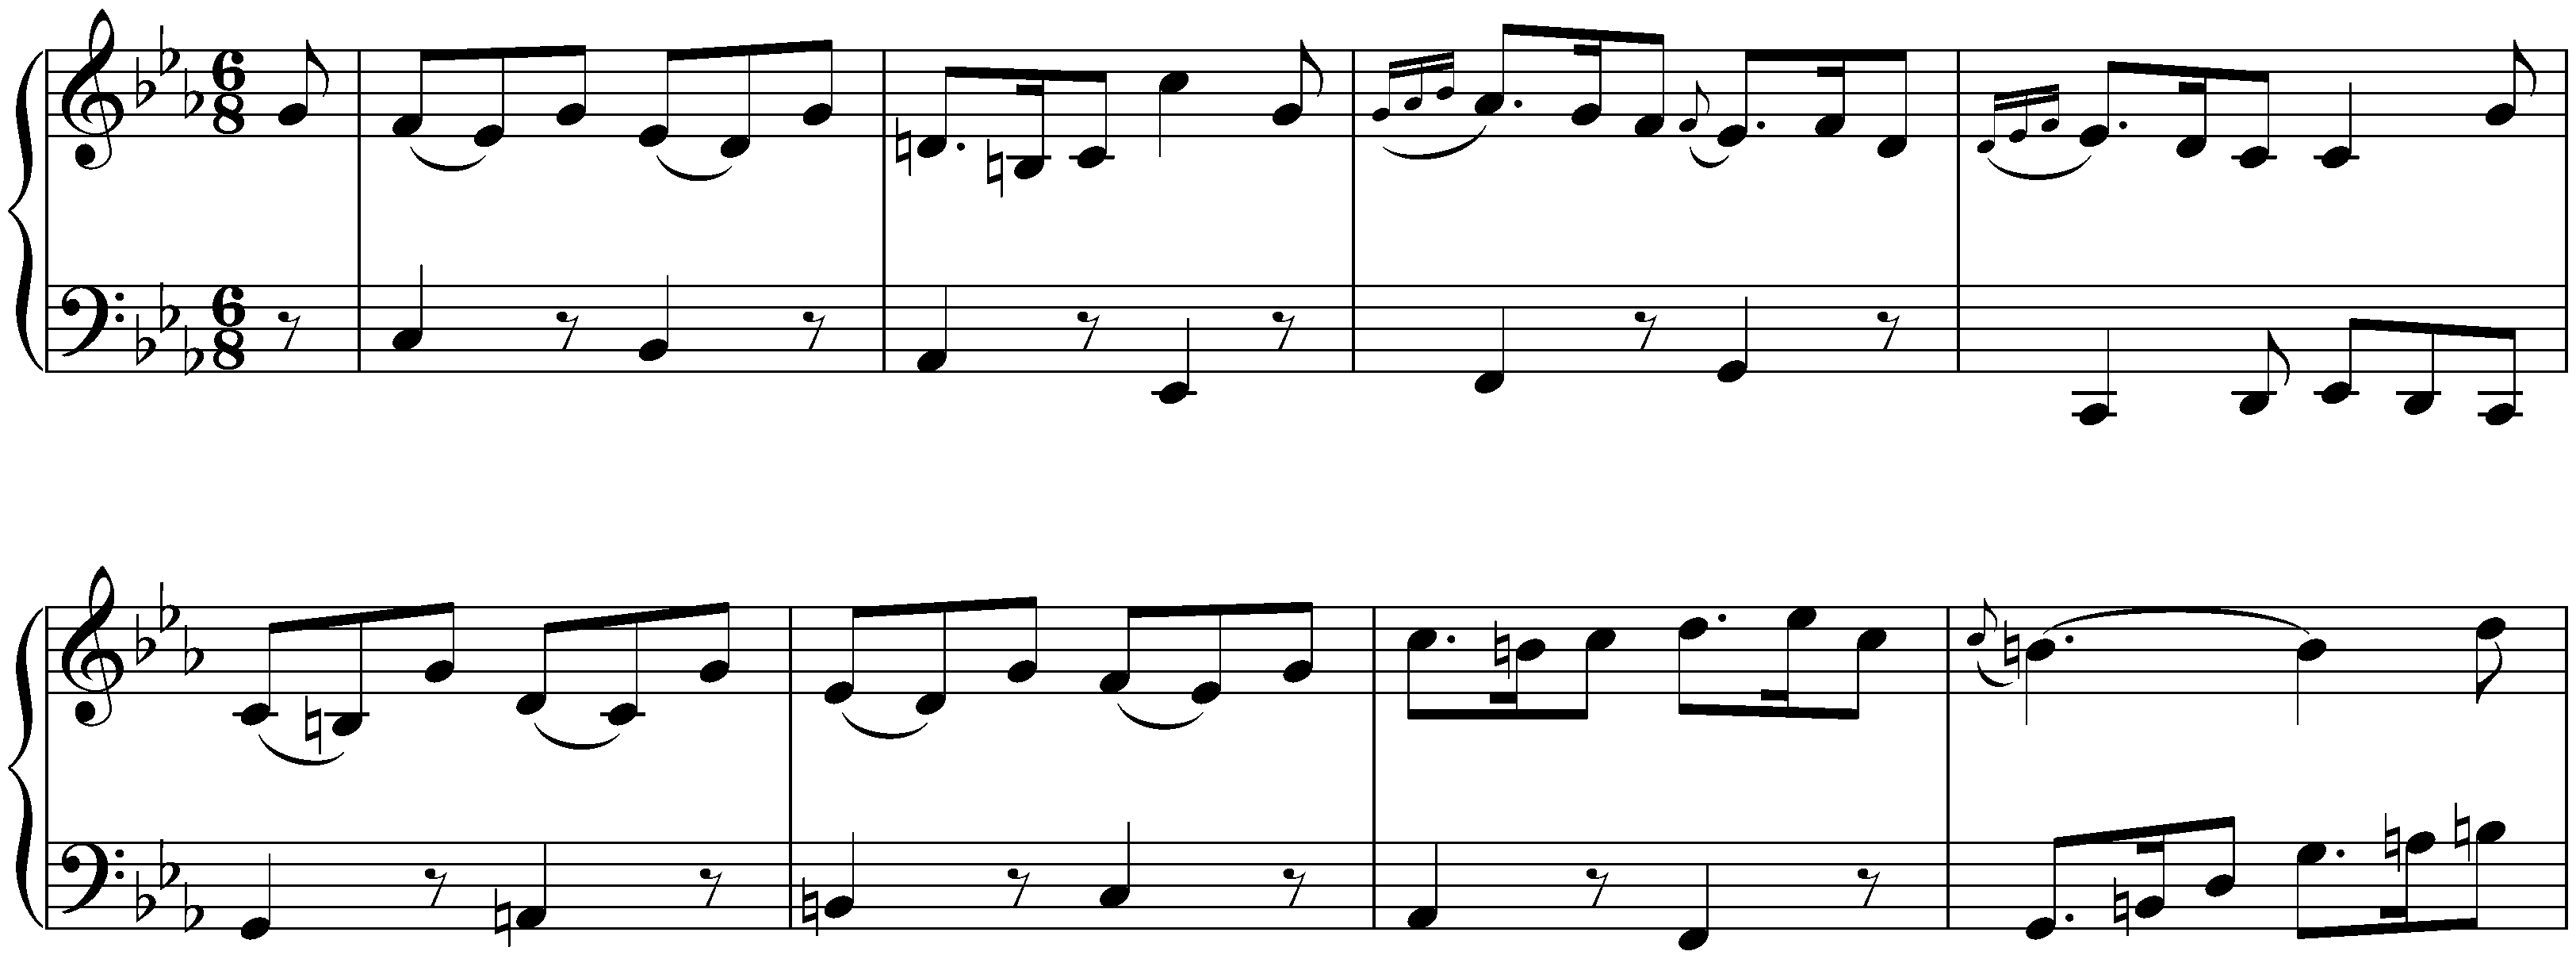 Suite in C minor, BWV 997; 4. Gigue